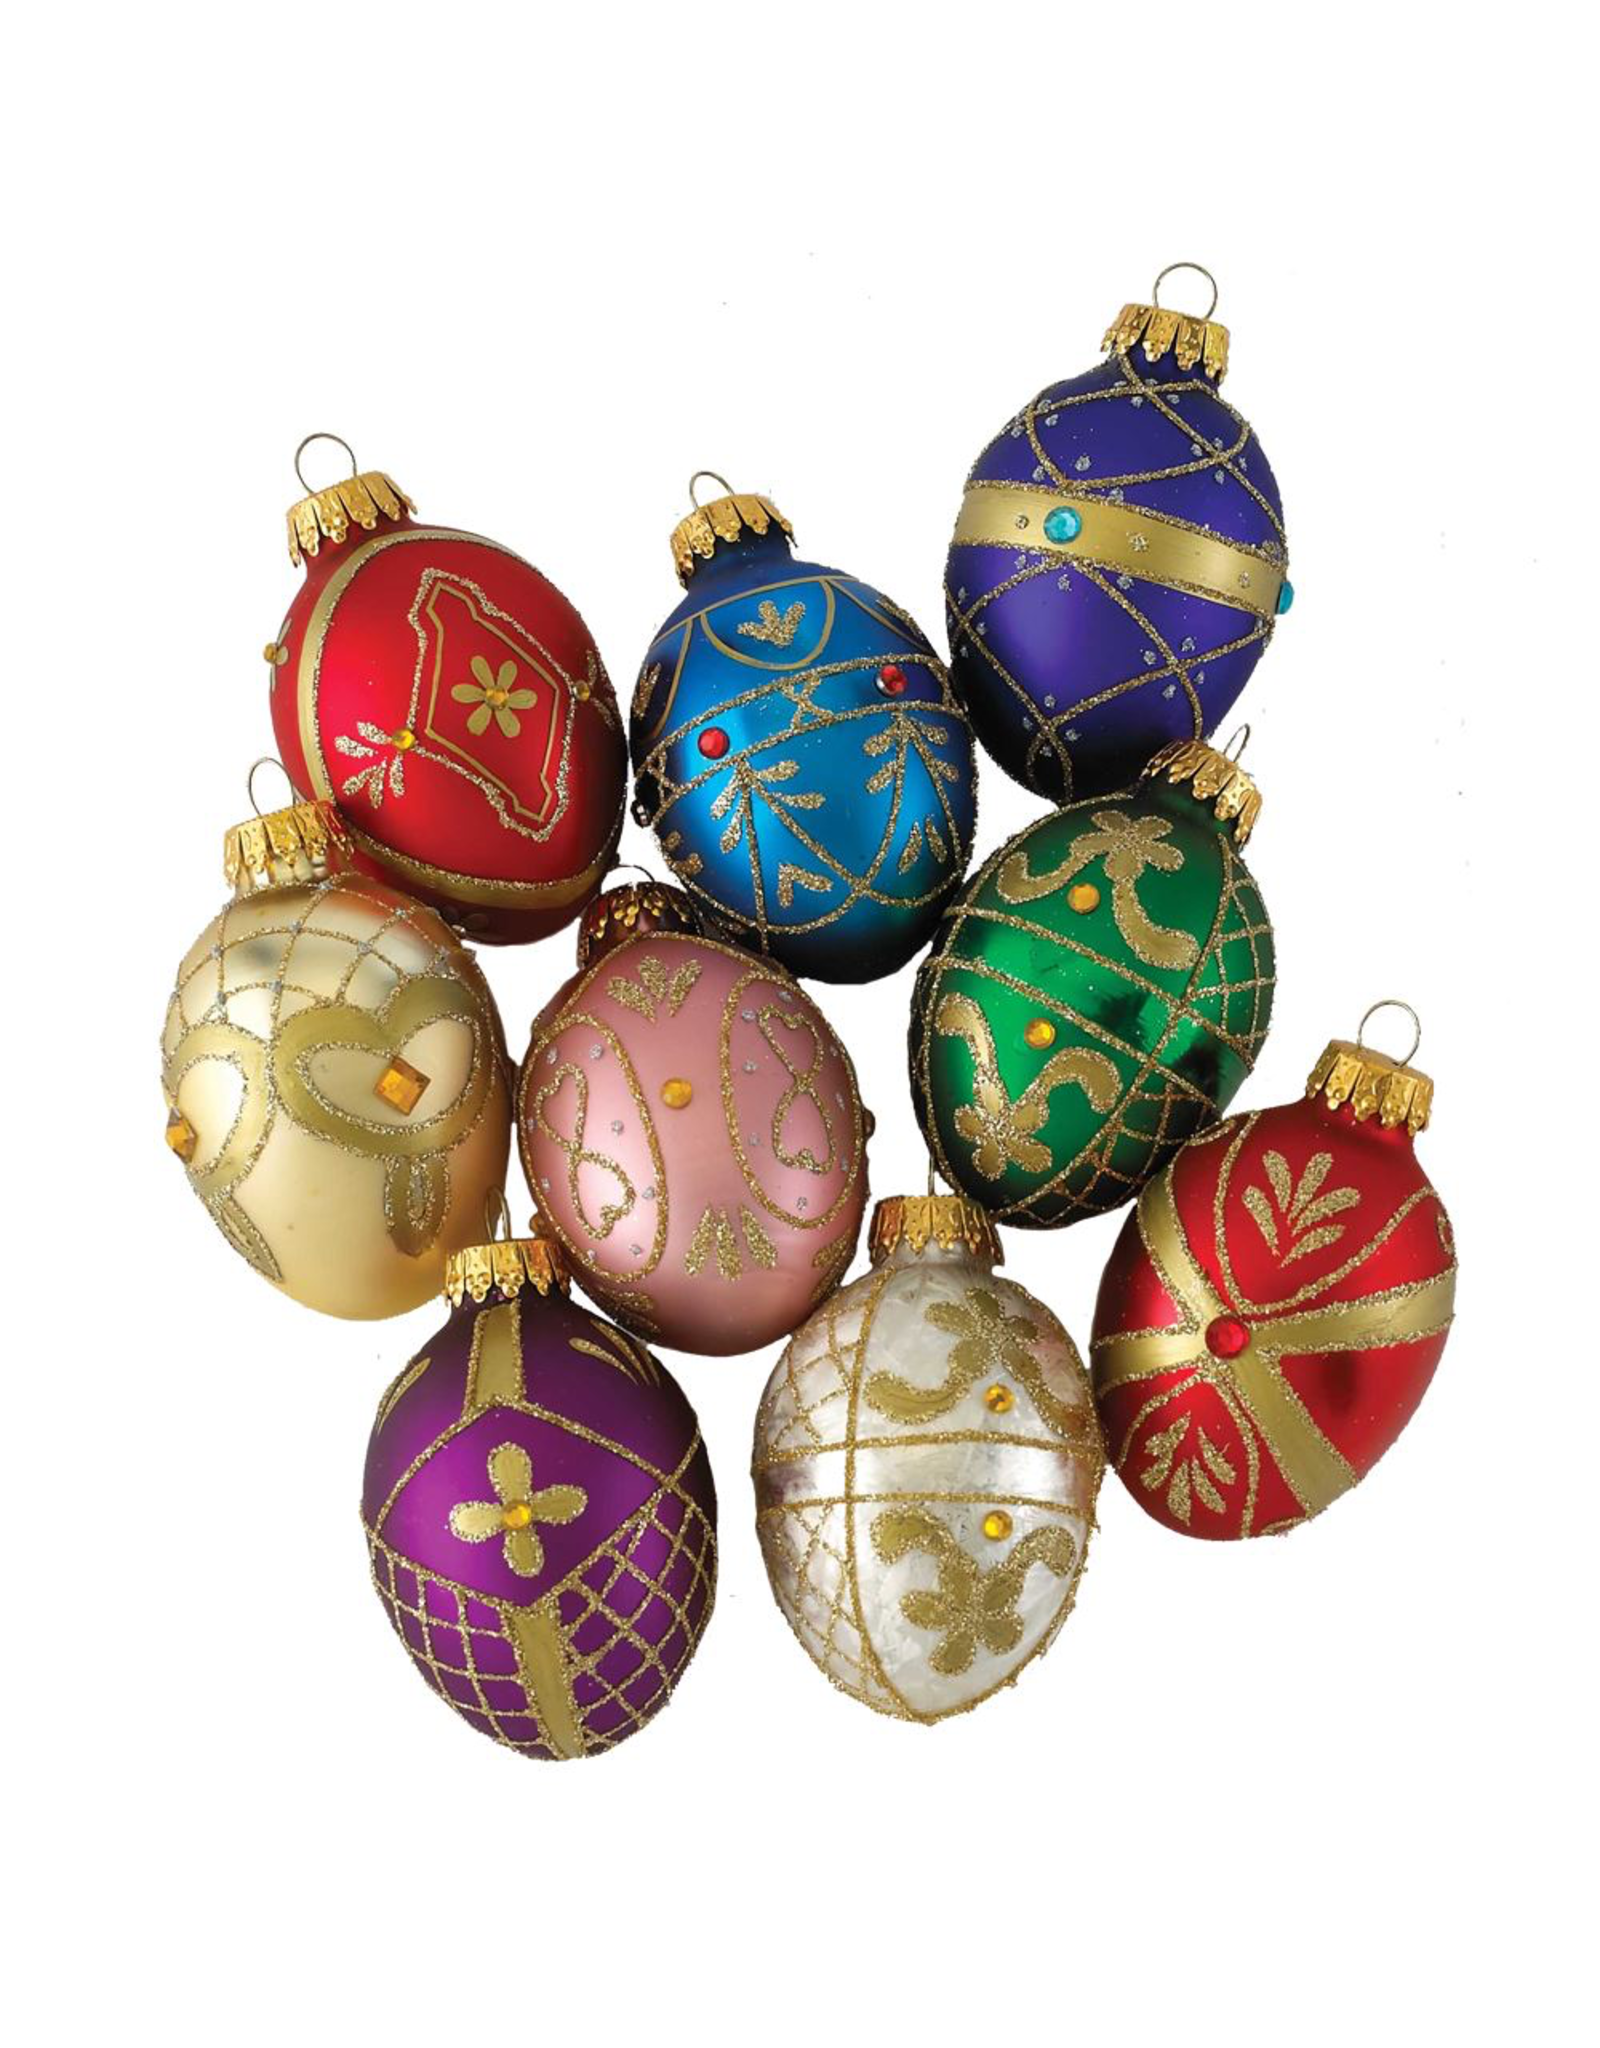 Kurt Adler Glass Decorative Egg Ornaments 45mm Set of 9